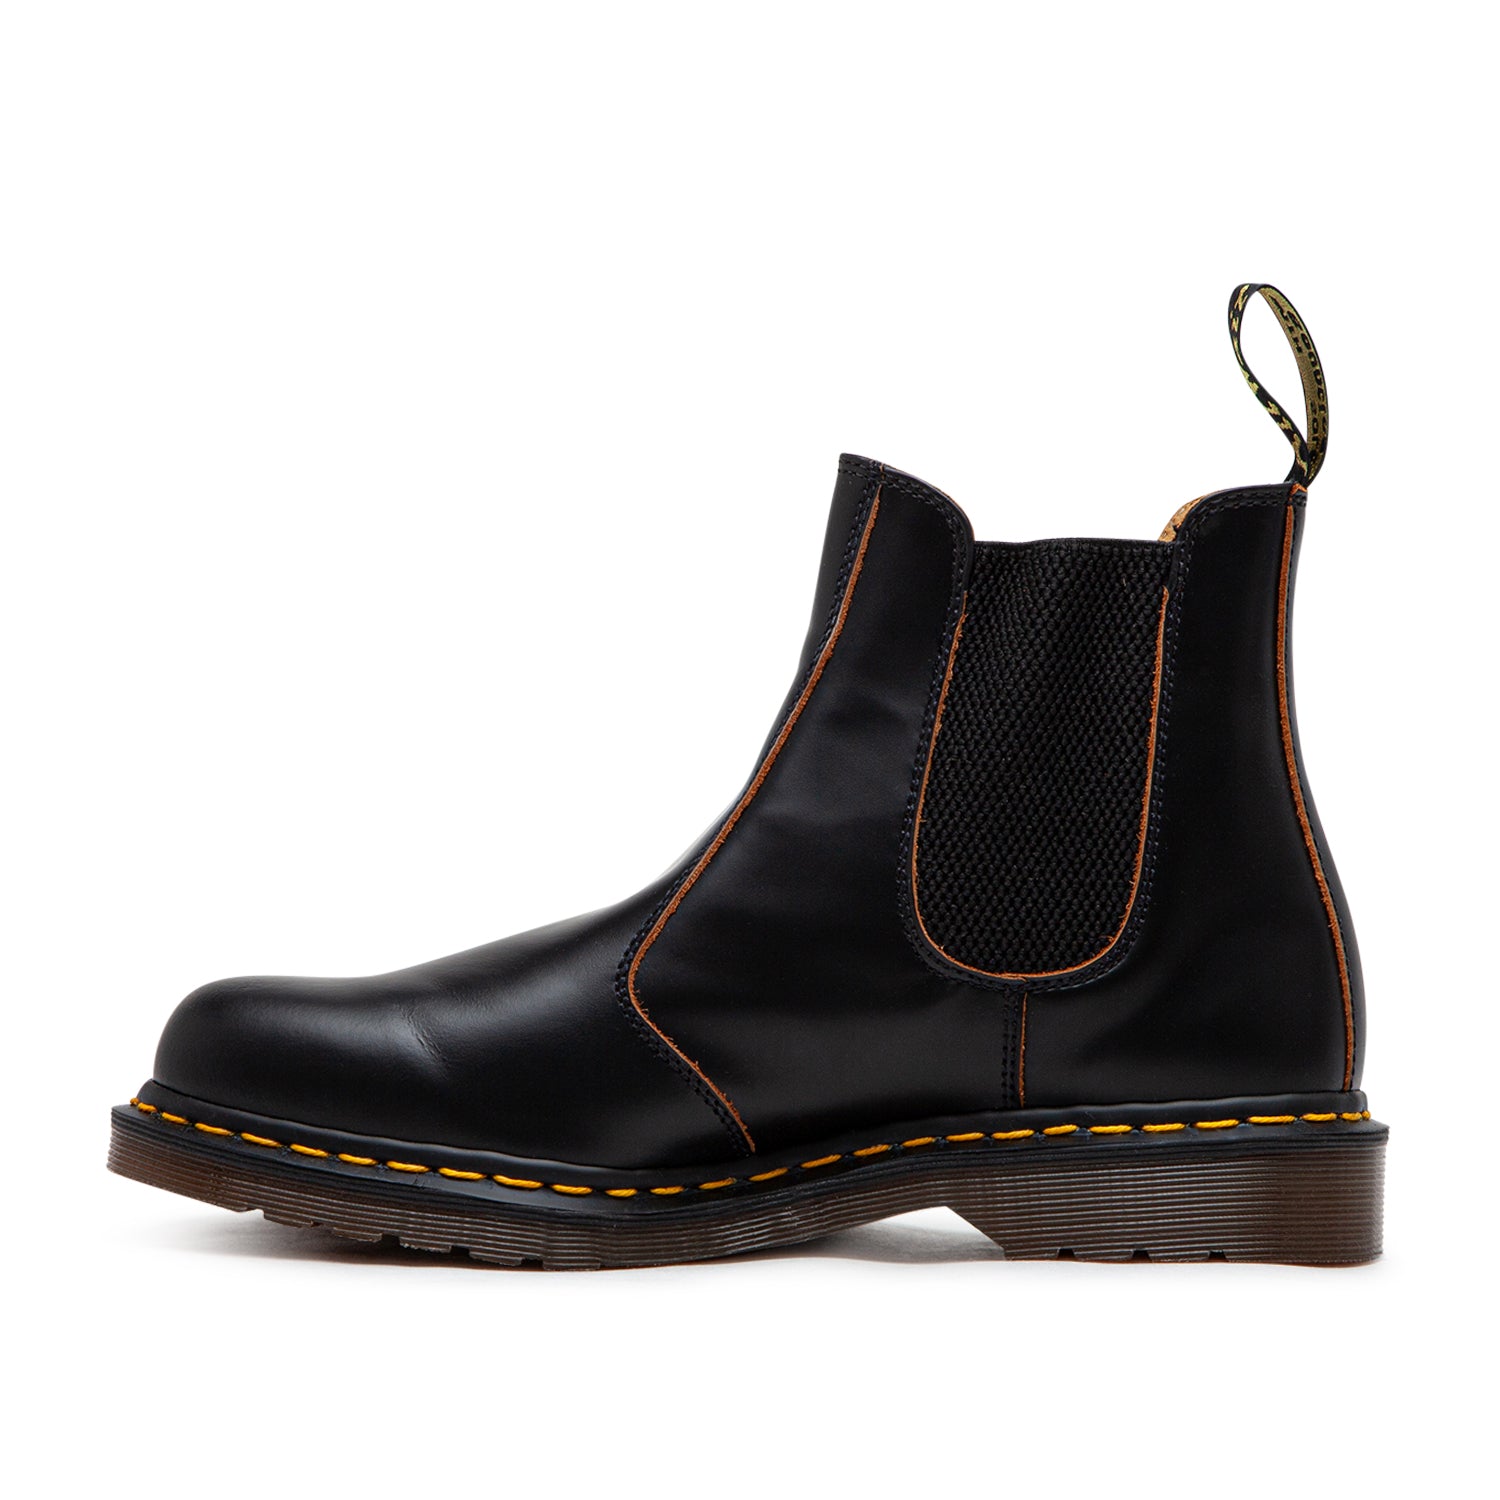 Dr. Martens 2976 Vintage Made in England Chelsea Boots (Schwarz)  - Allike Store